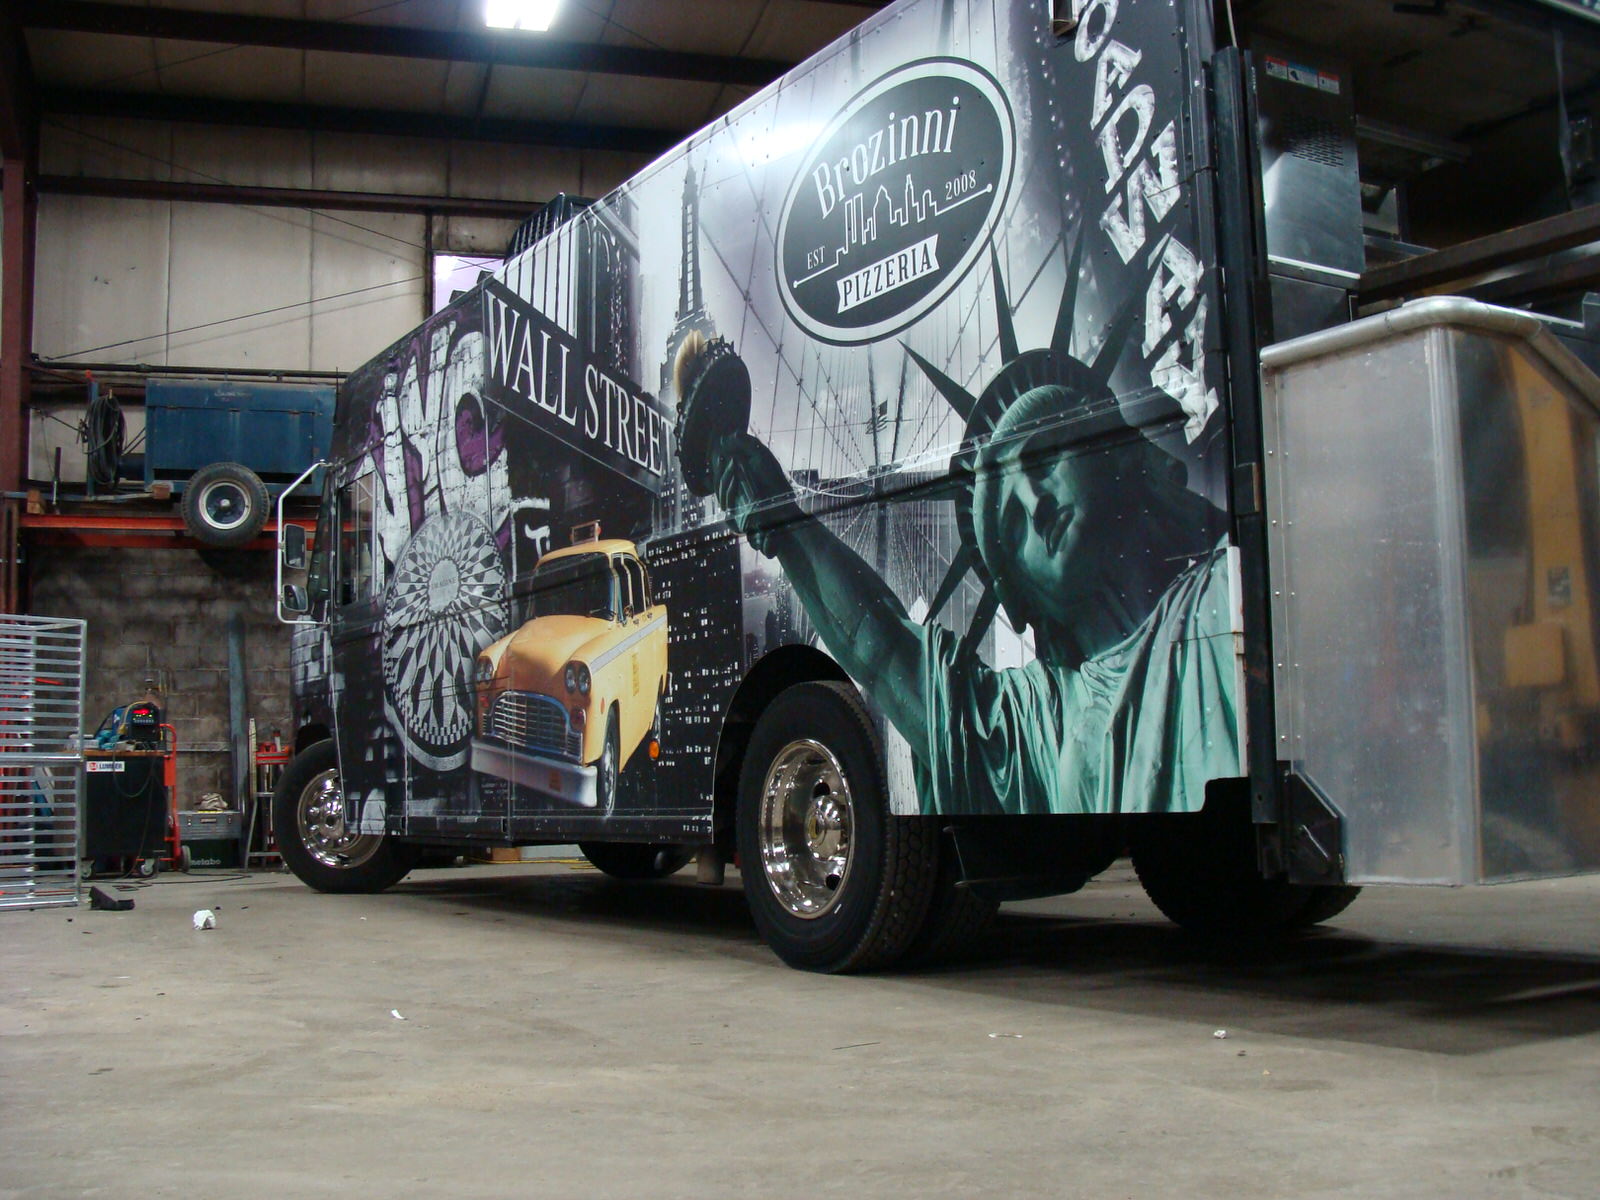 The Brozinni Pizzeria truck in the Jezroc Metalworks workshop.